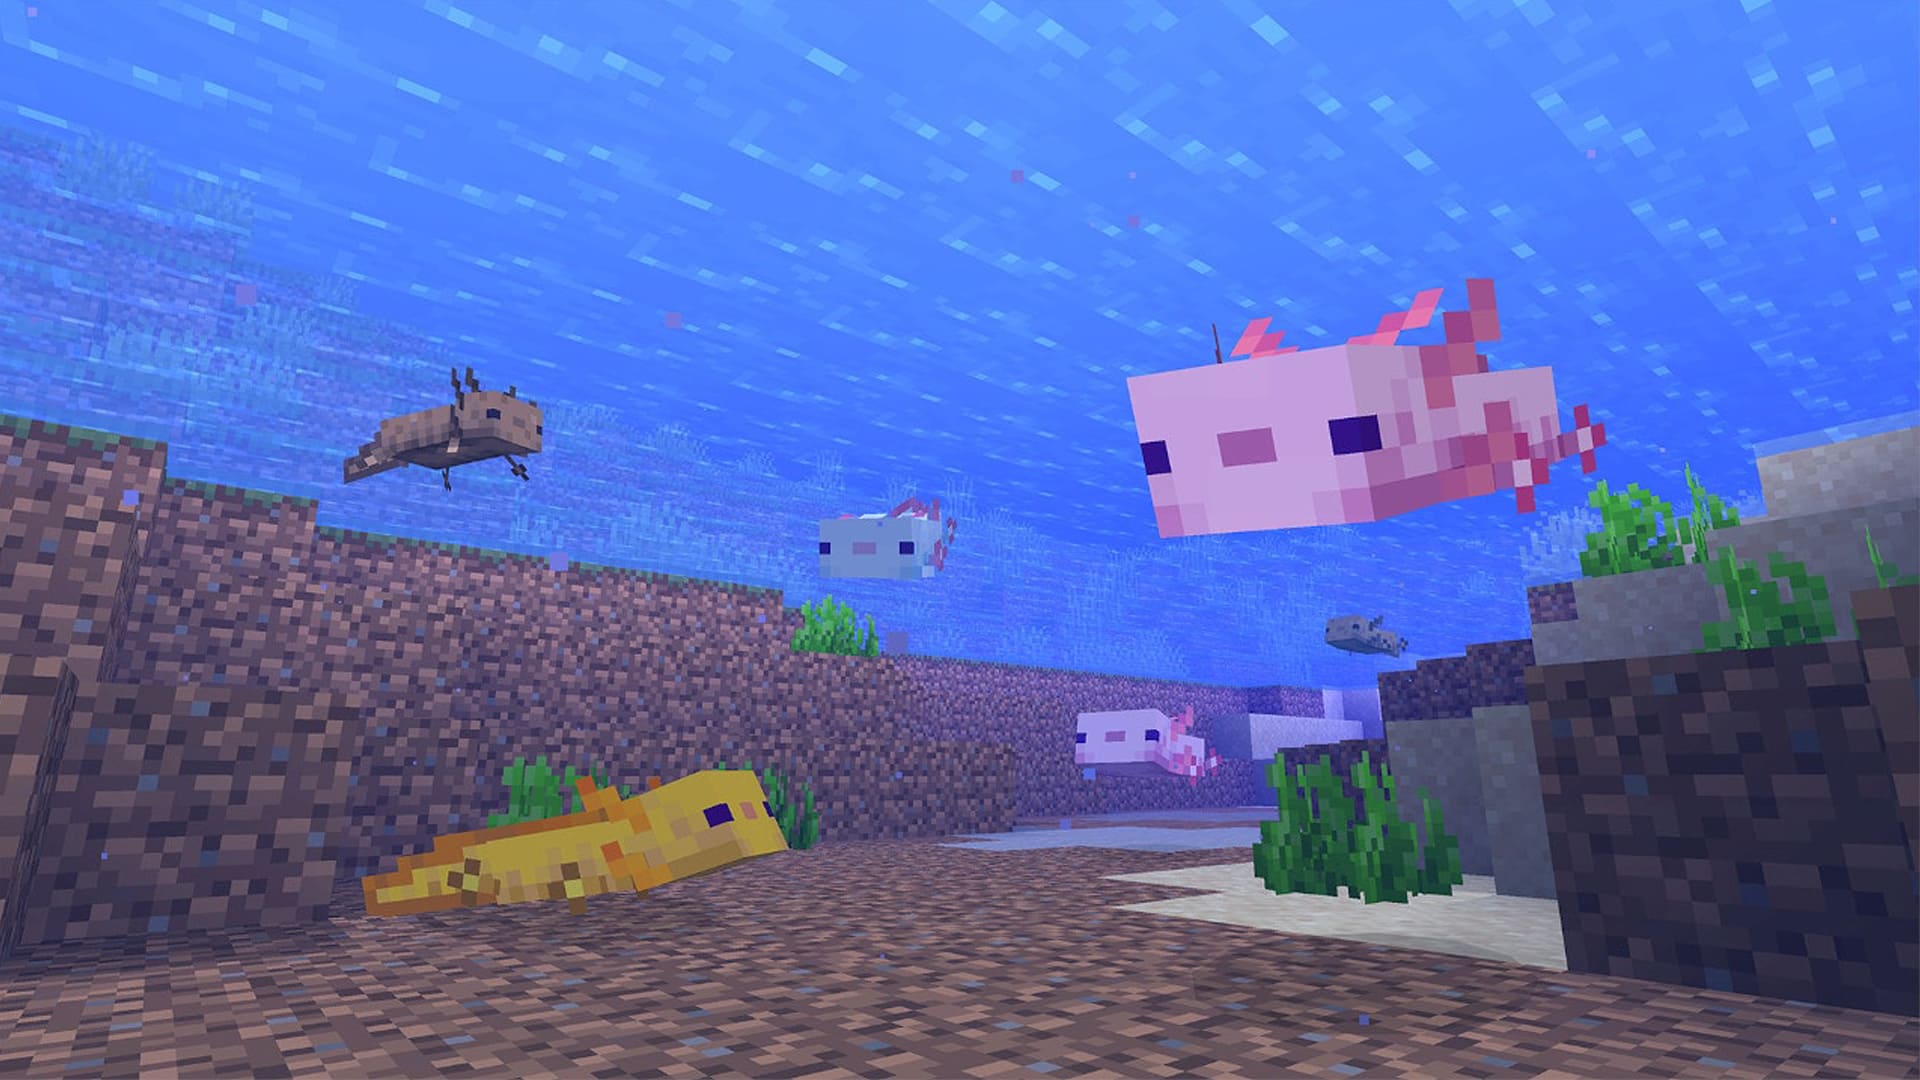 Axolotlها در آپدیت 1.18 بازی ماینکرافت ماینکرفت  تنها در غارهای سرسبز یافت خواهند شد